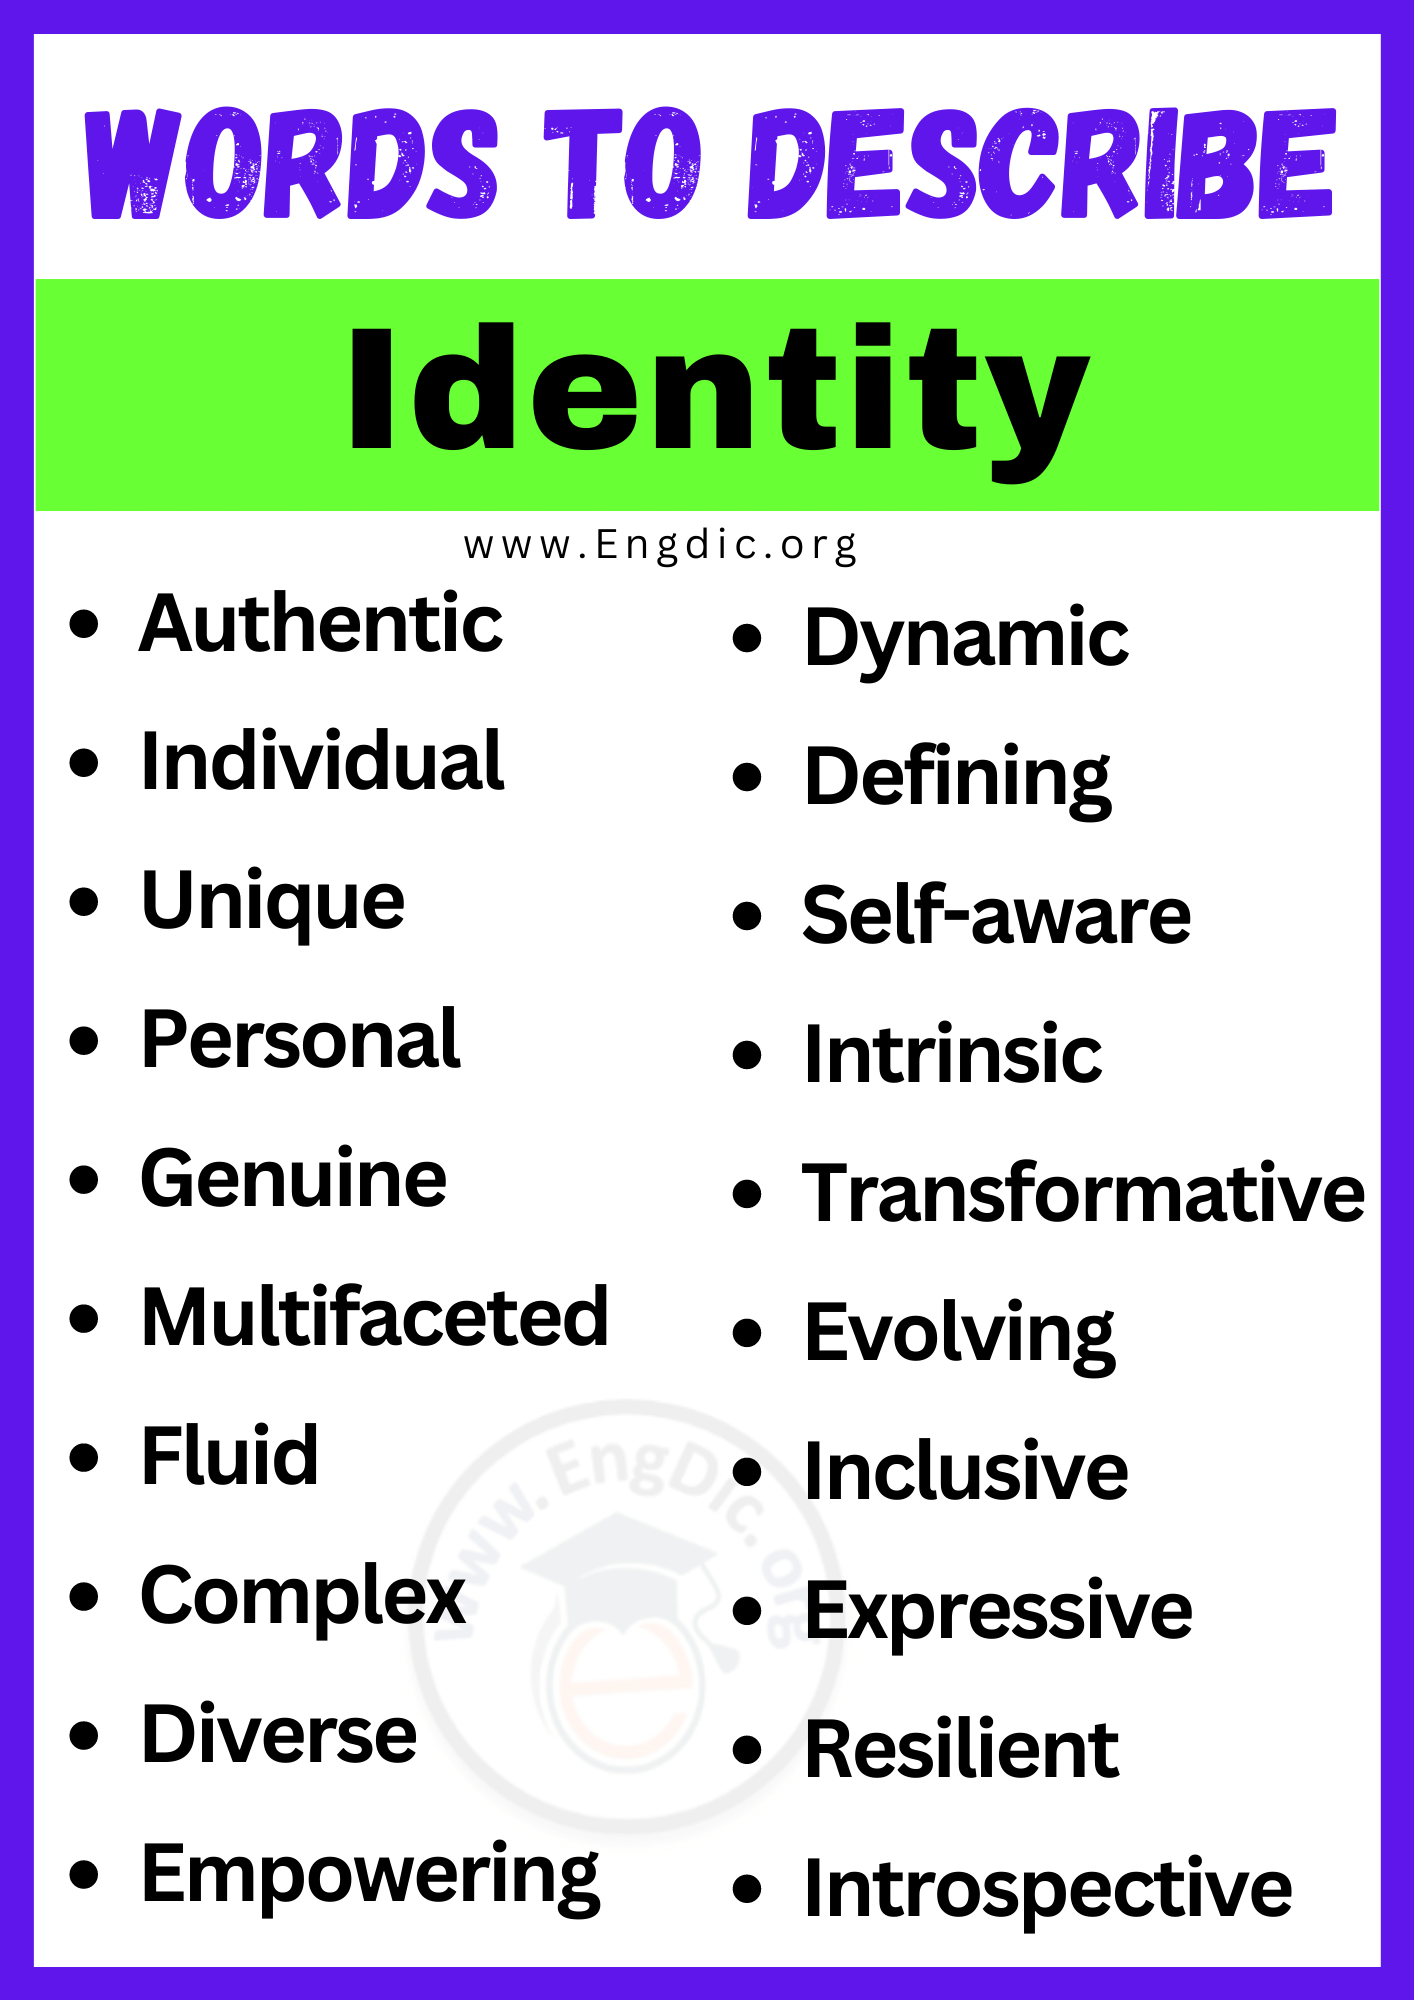 Words to Describe Identity